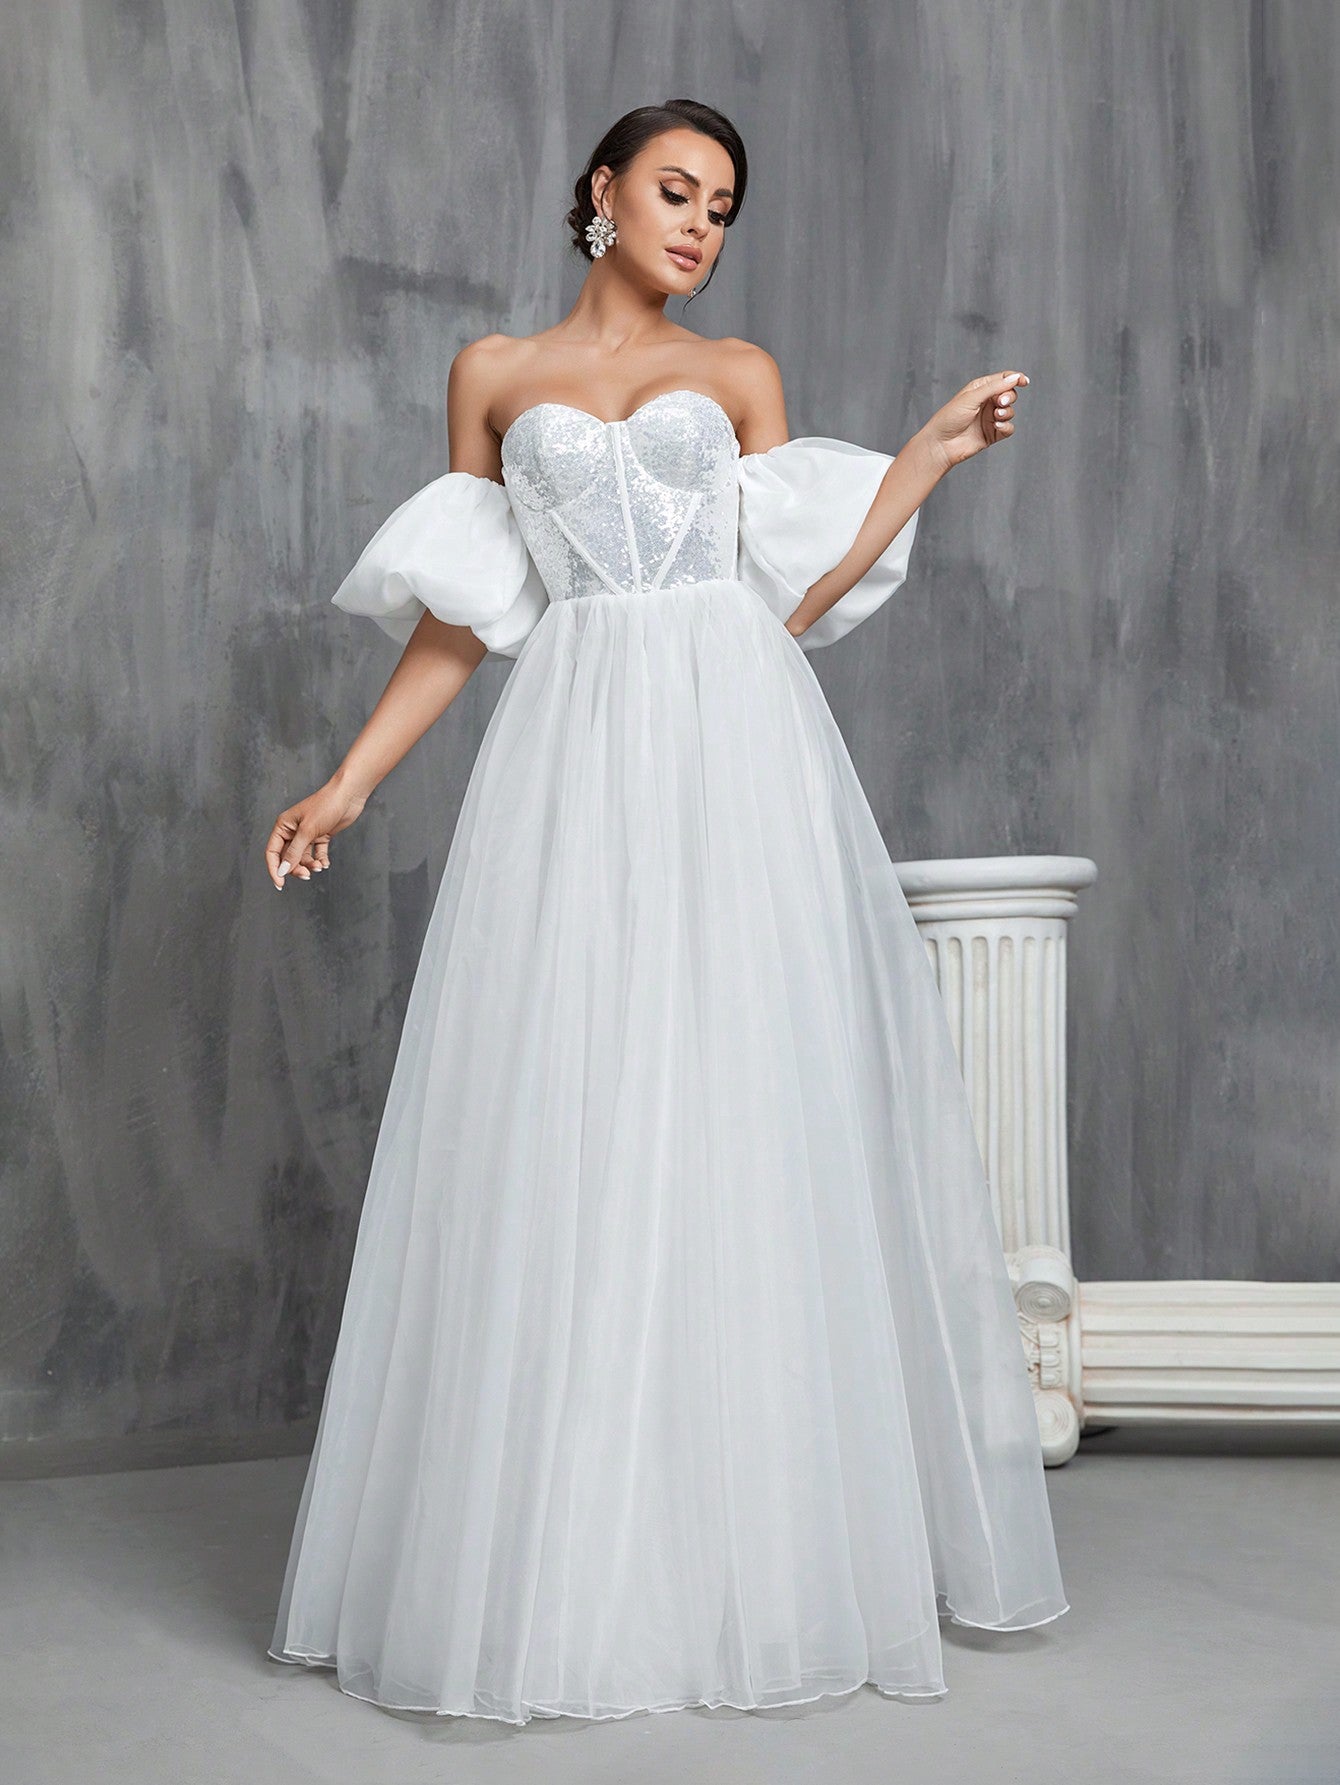 Elegant Off-Shoulder Sequin Sweetheart Neckline Wedding Dress with Puff Sleeves